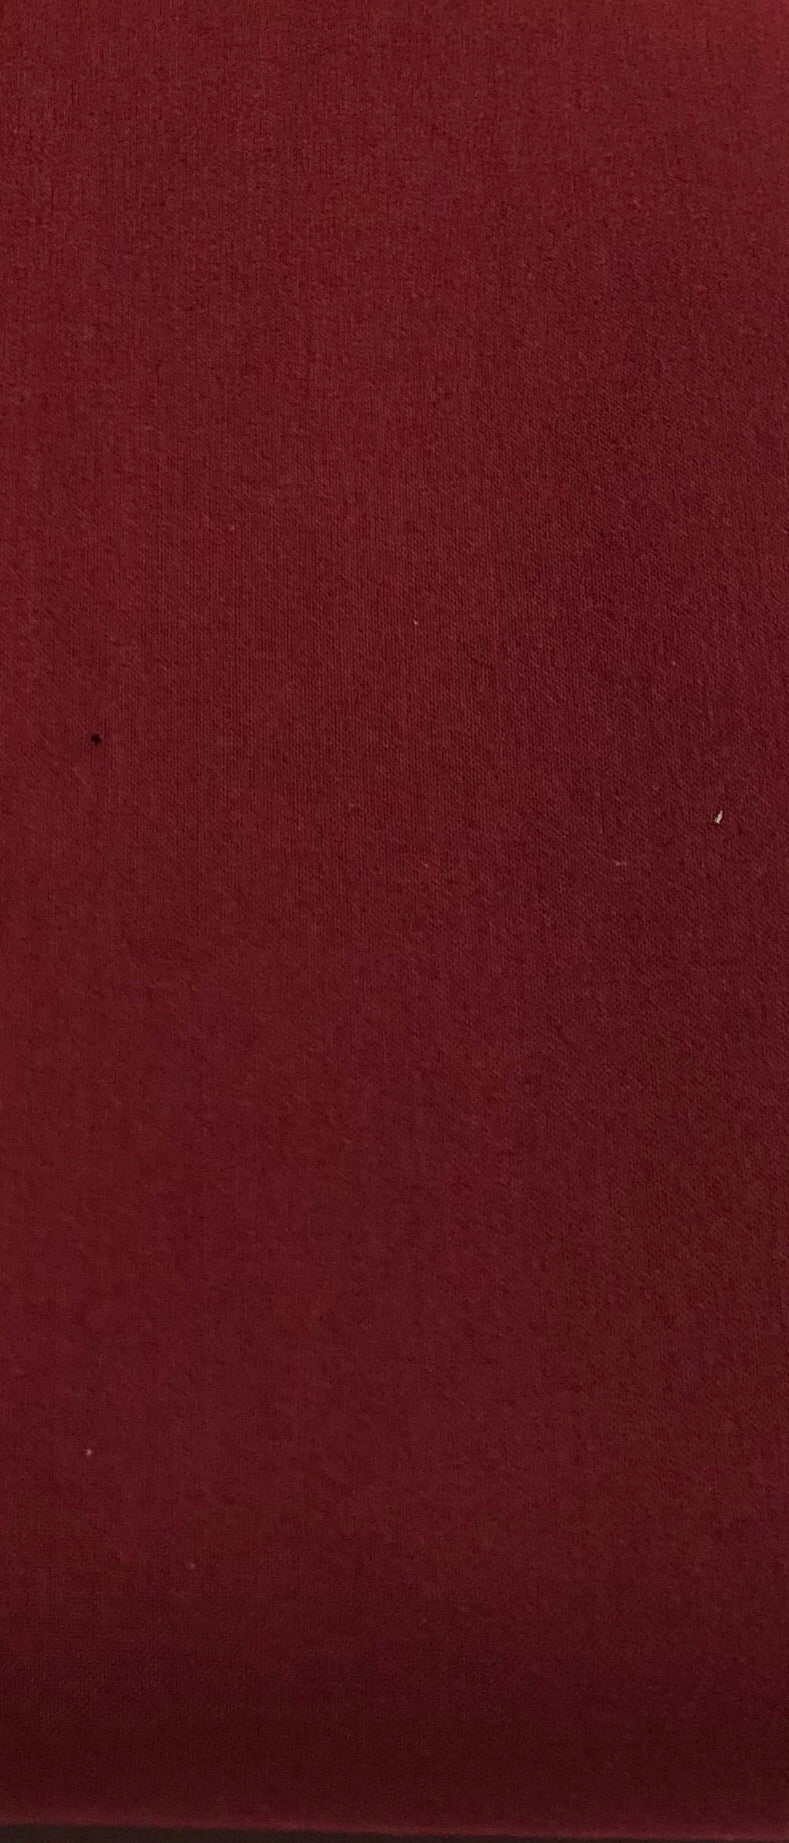 Table Cloth- Burgundy (No pattern)